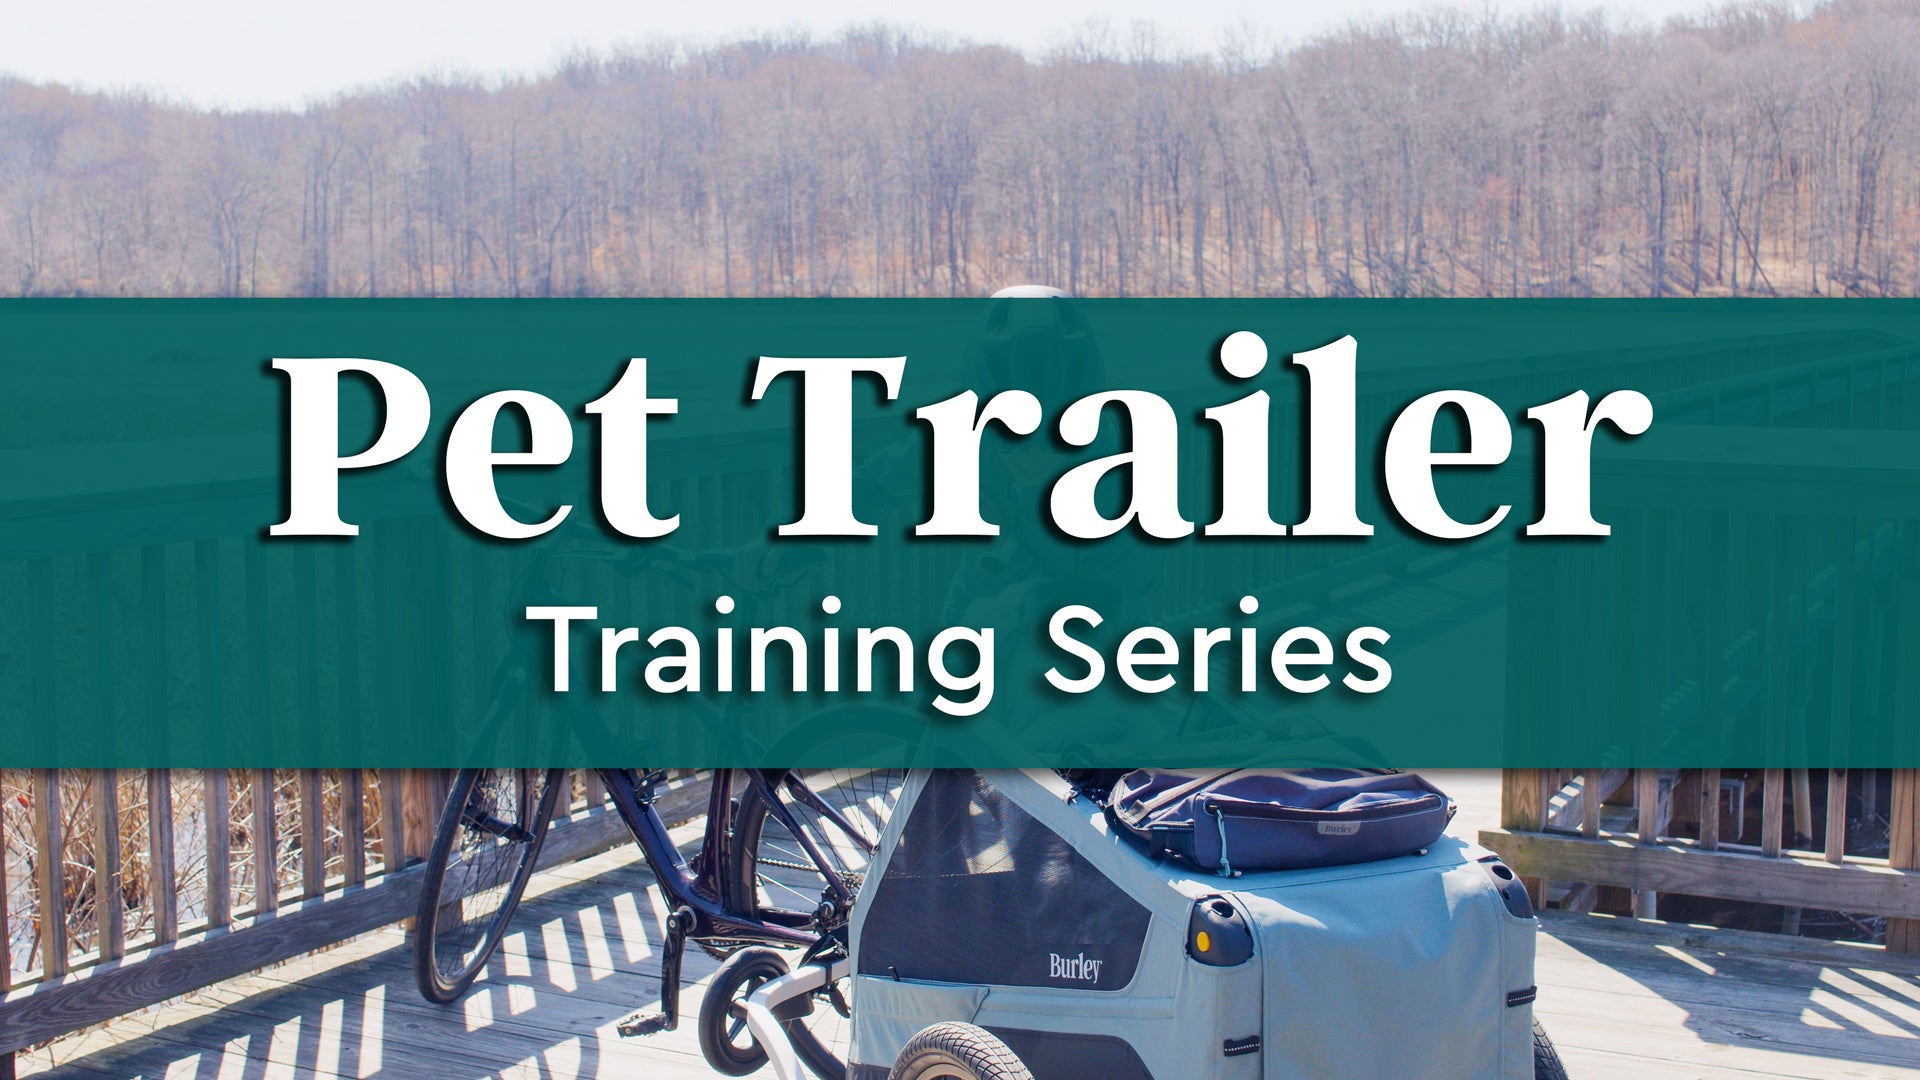 Pet Trailer Training Series - Introduction